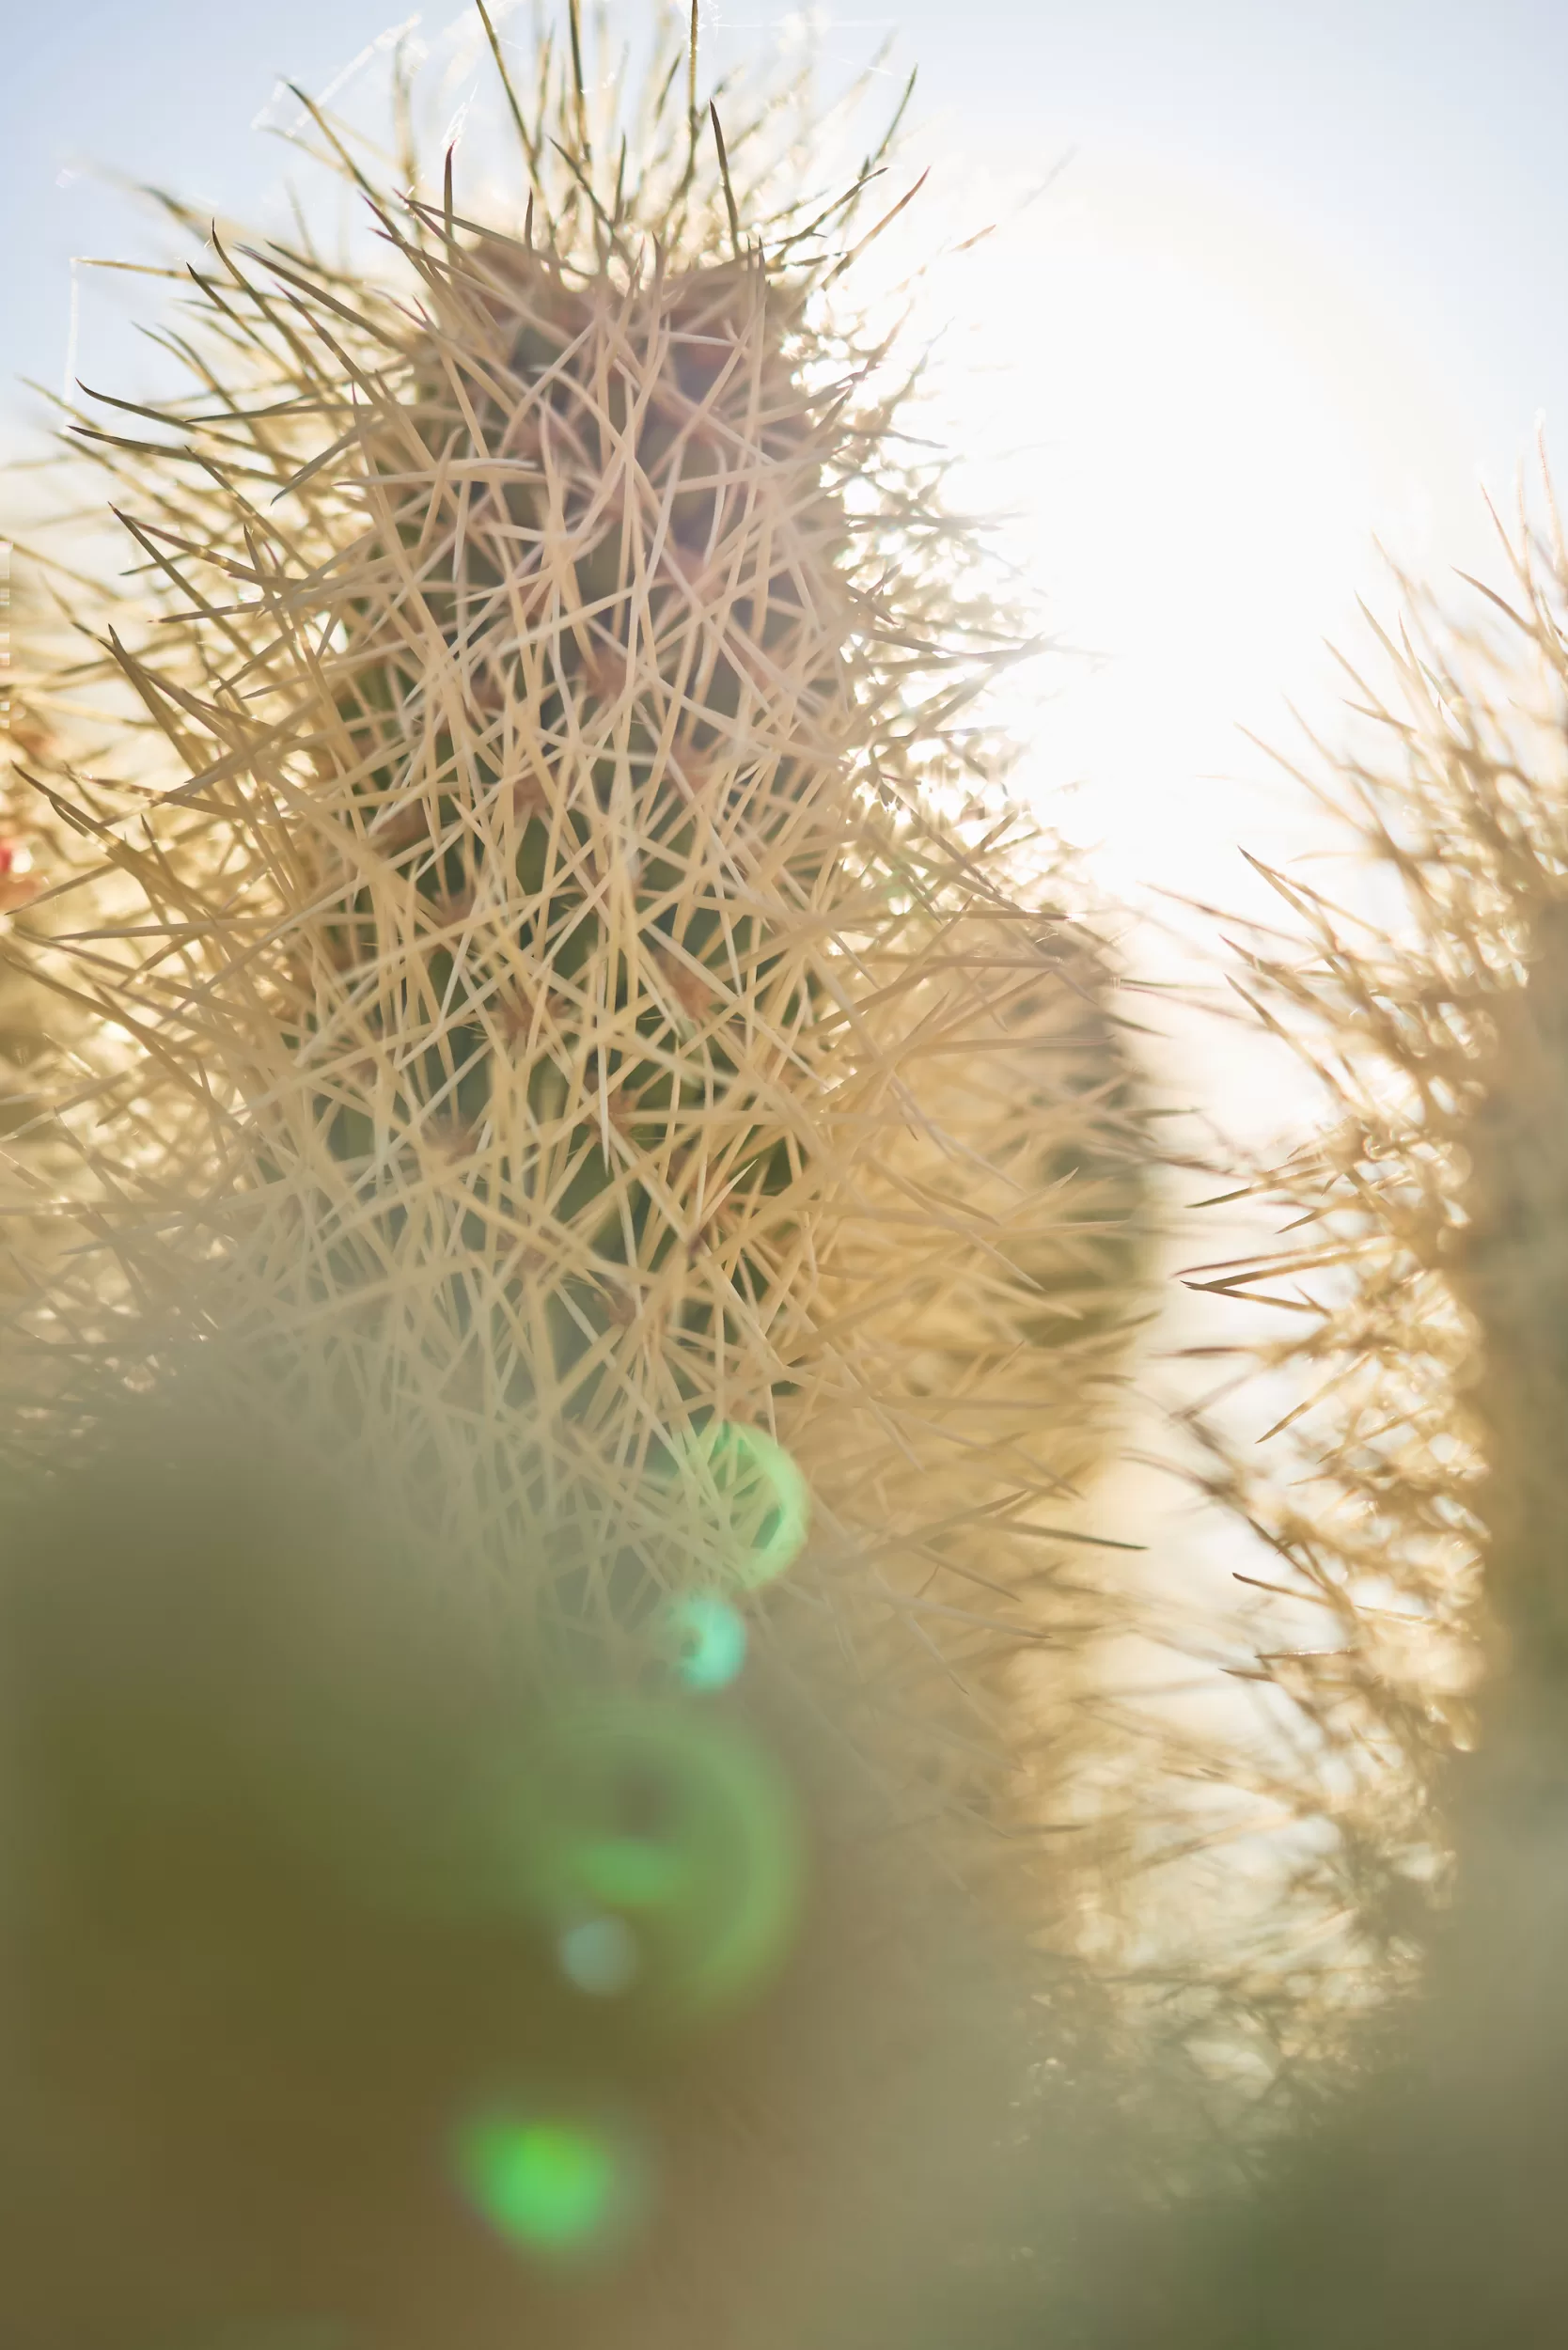 Joshua Tree Cactus December Calendar Image